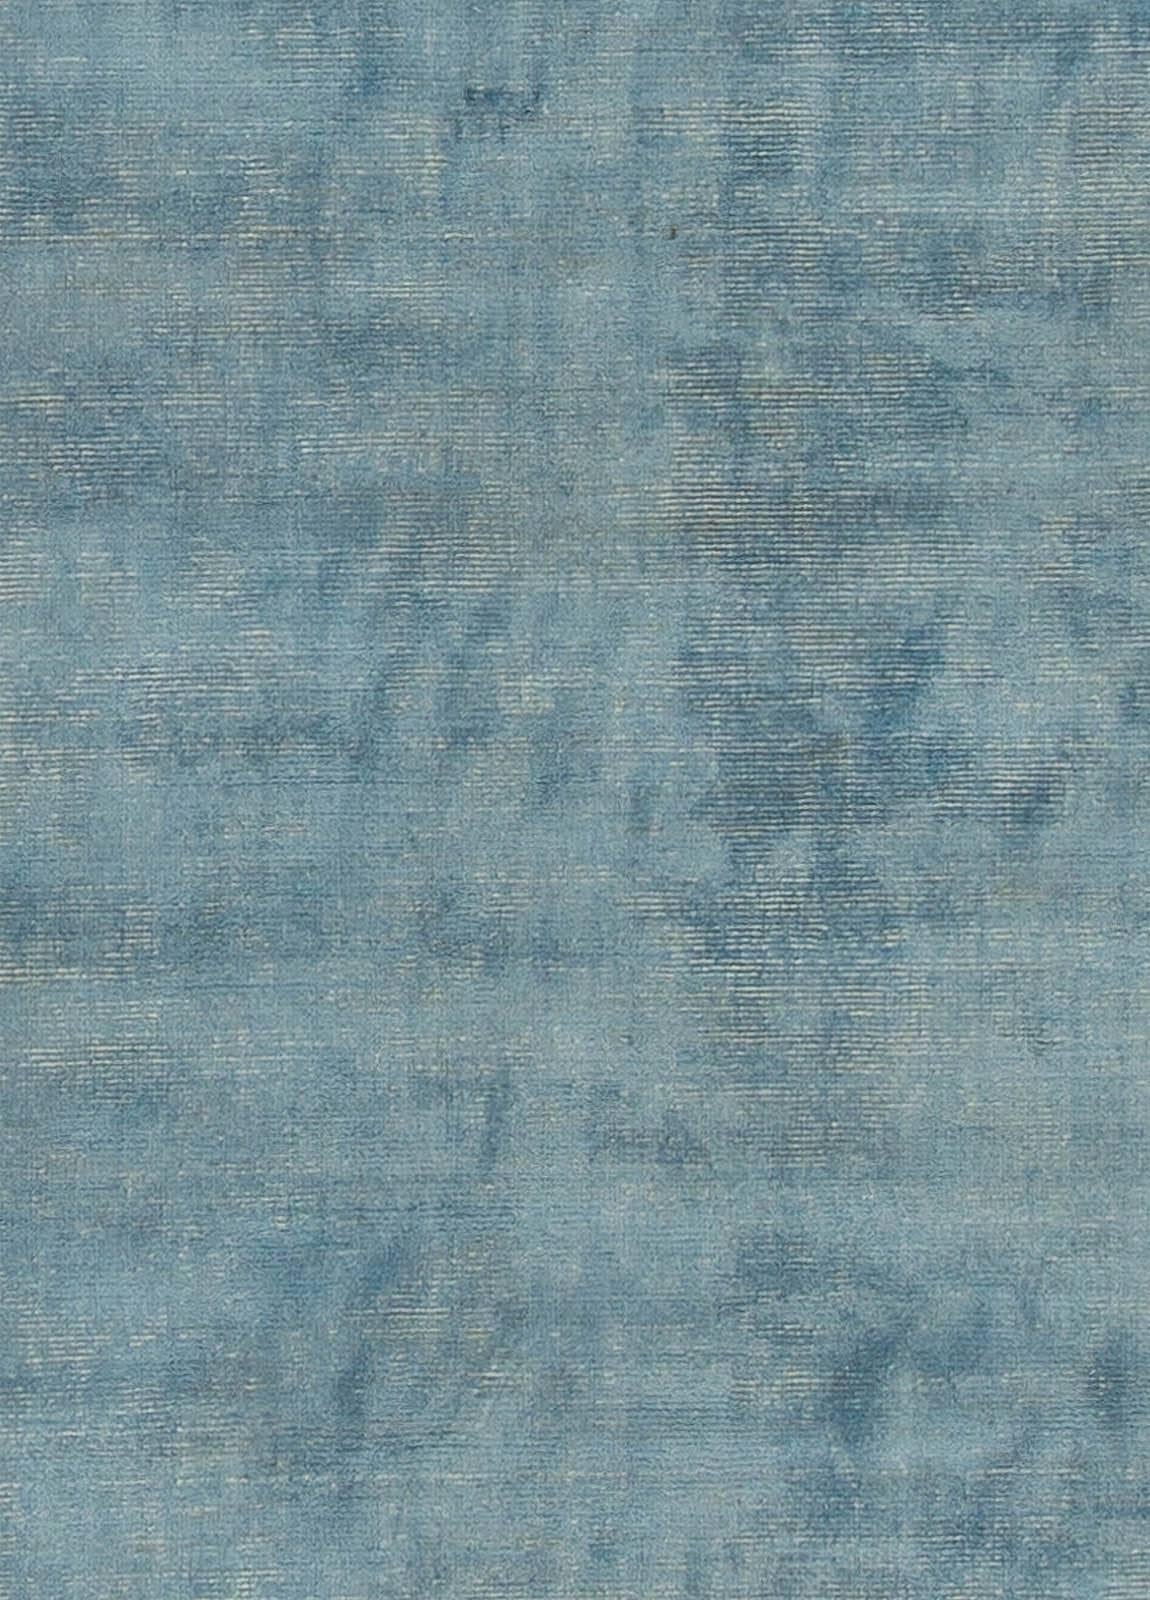 Modern traditional blue handmade linen and silk rug by Doris Leslie Blau
Size: 11'0